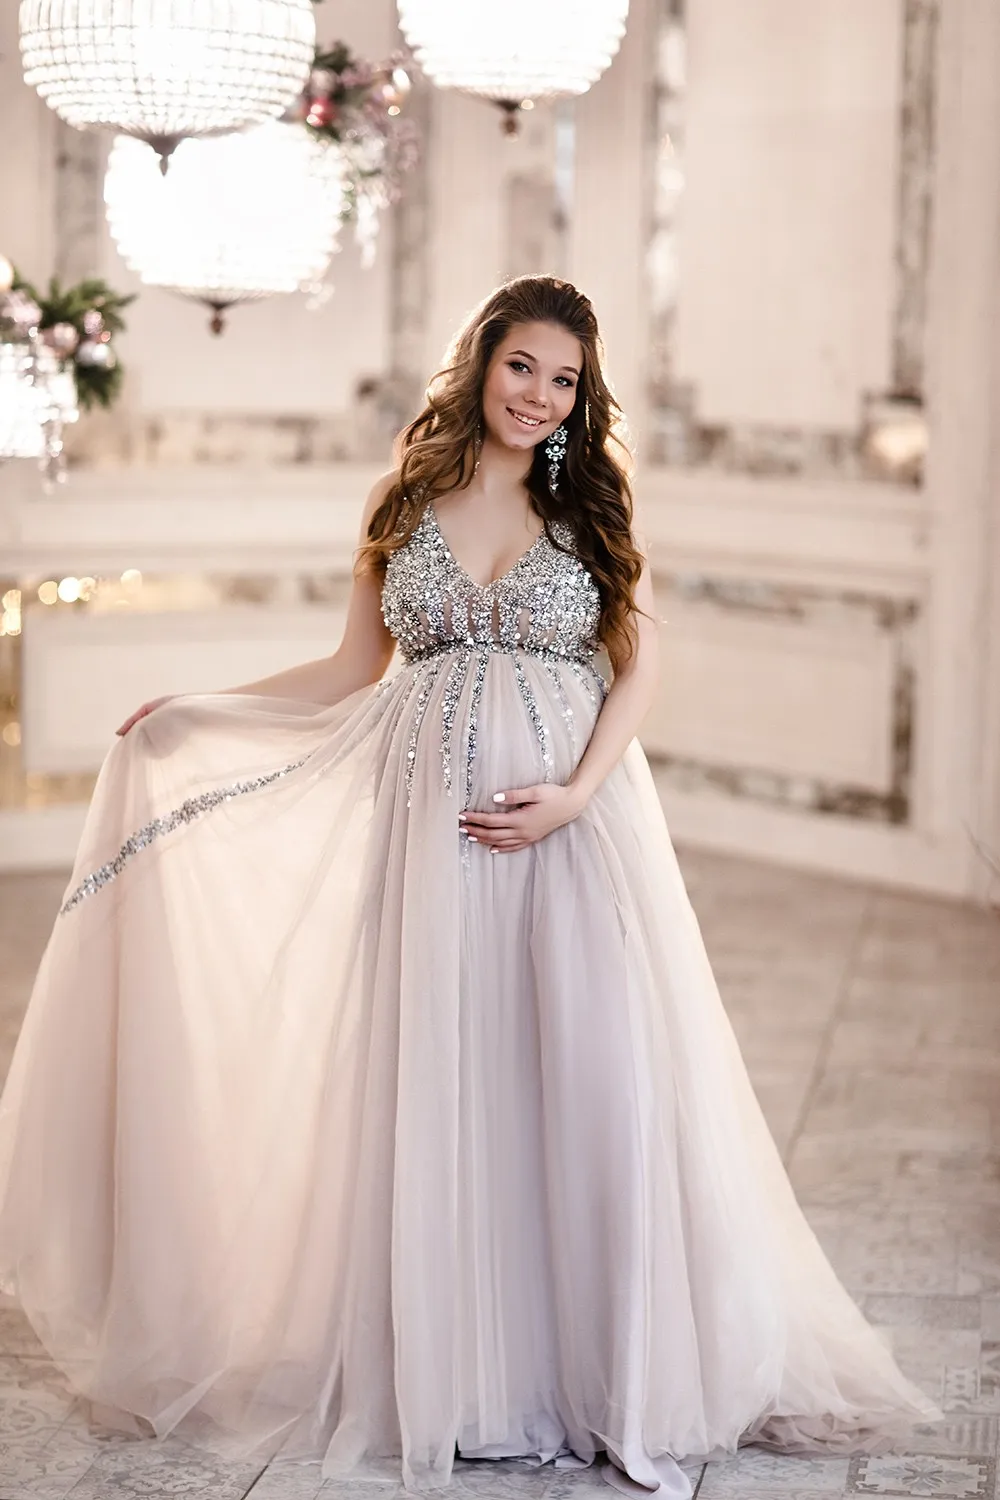 Baby Shower Dress Women Pregnant Dress Pregnant Dresses Women Maternity Gown  | eBay